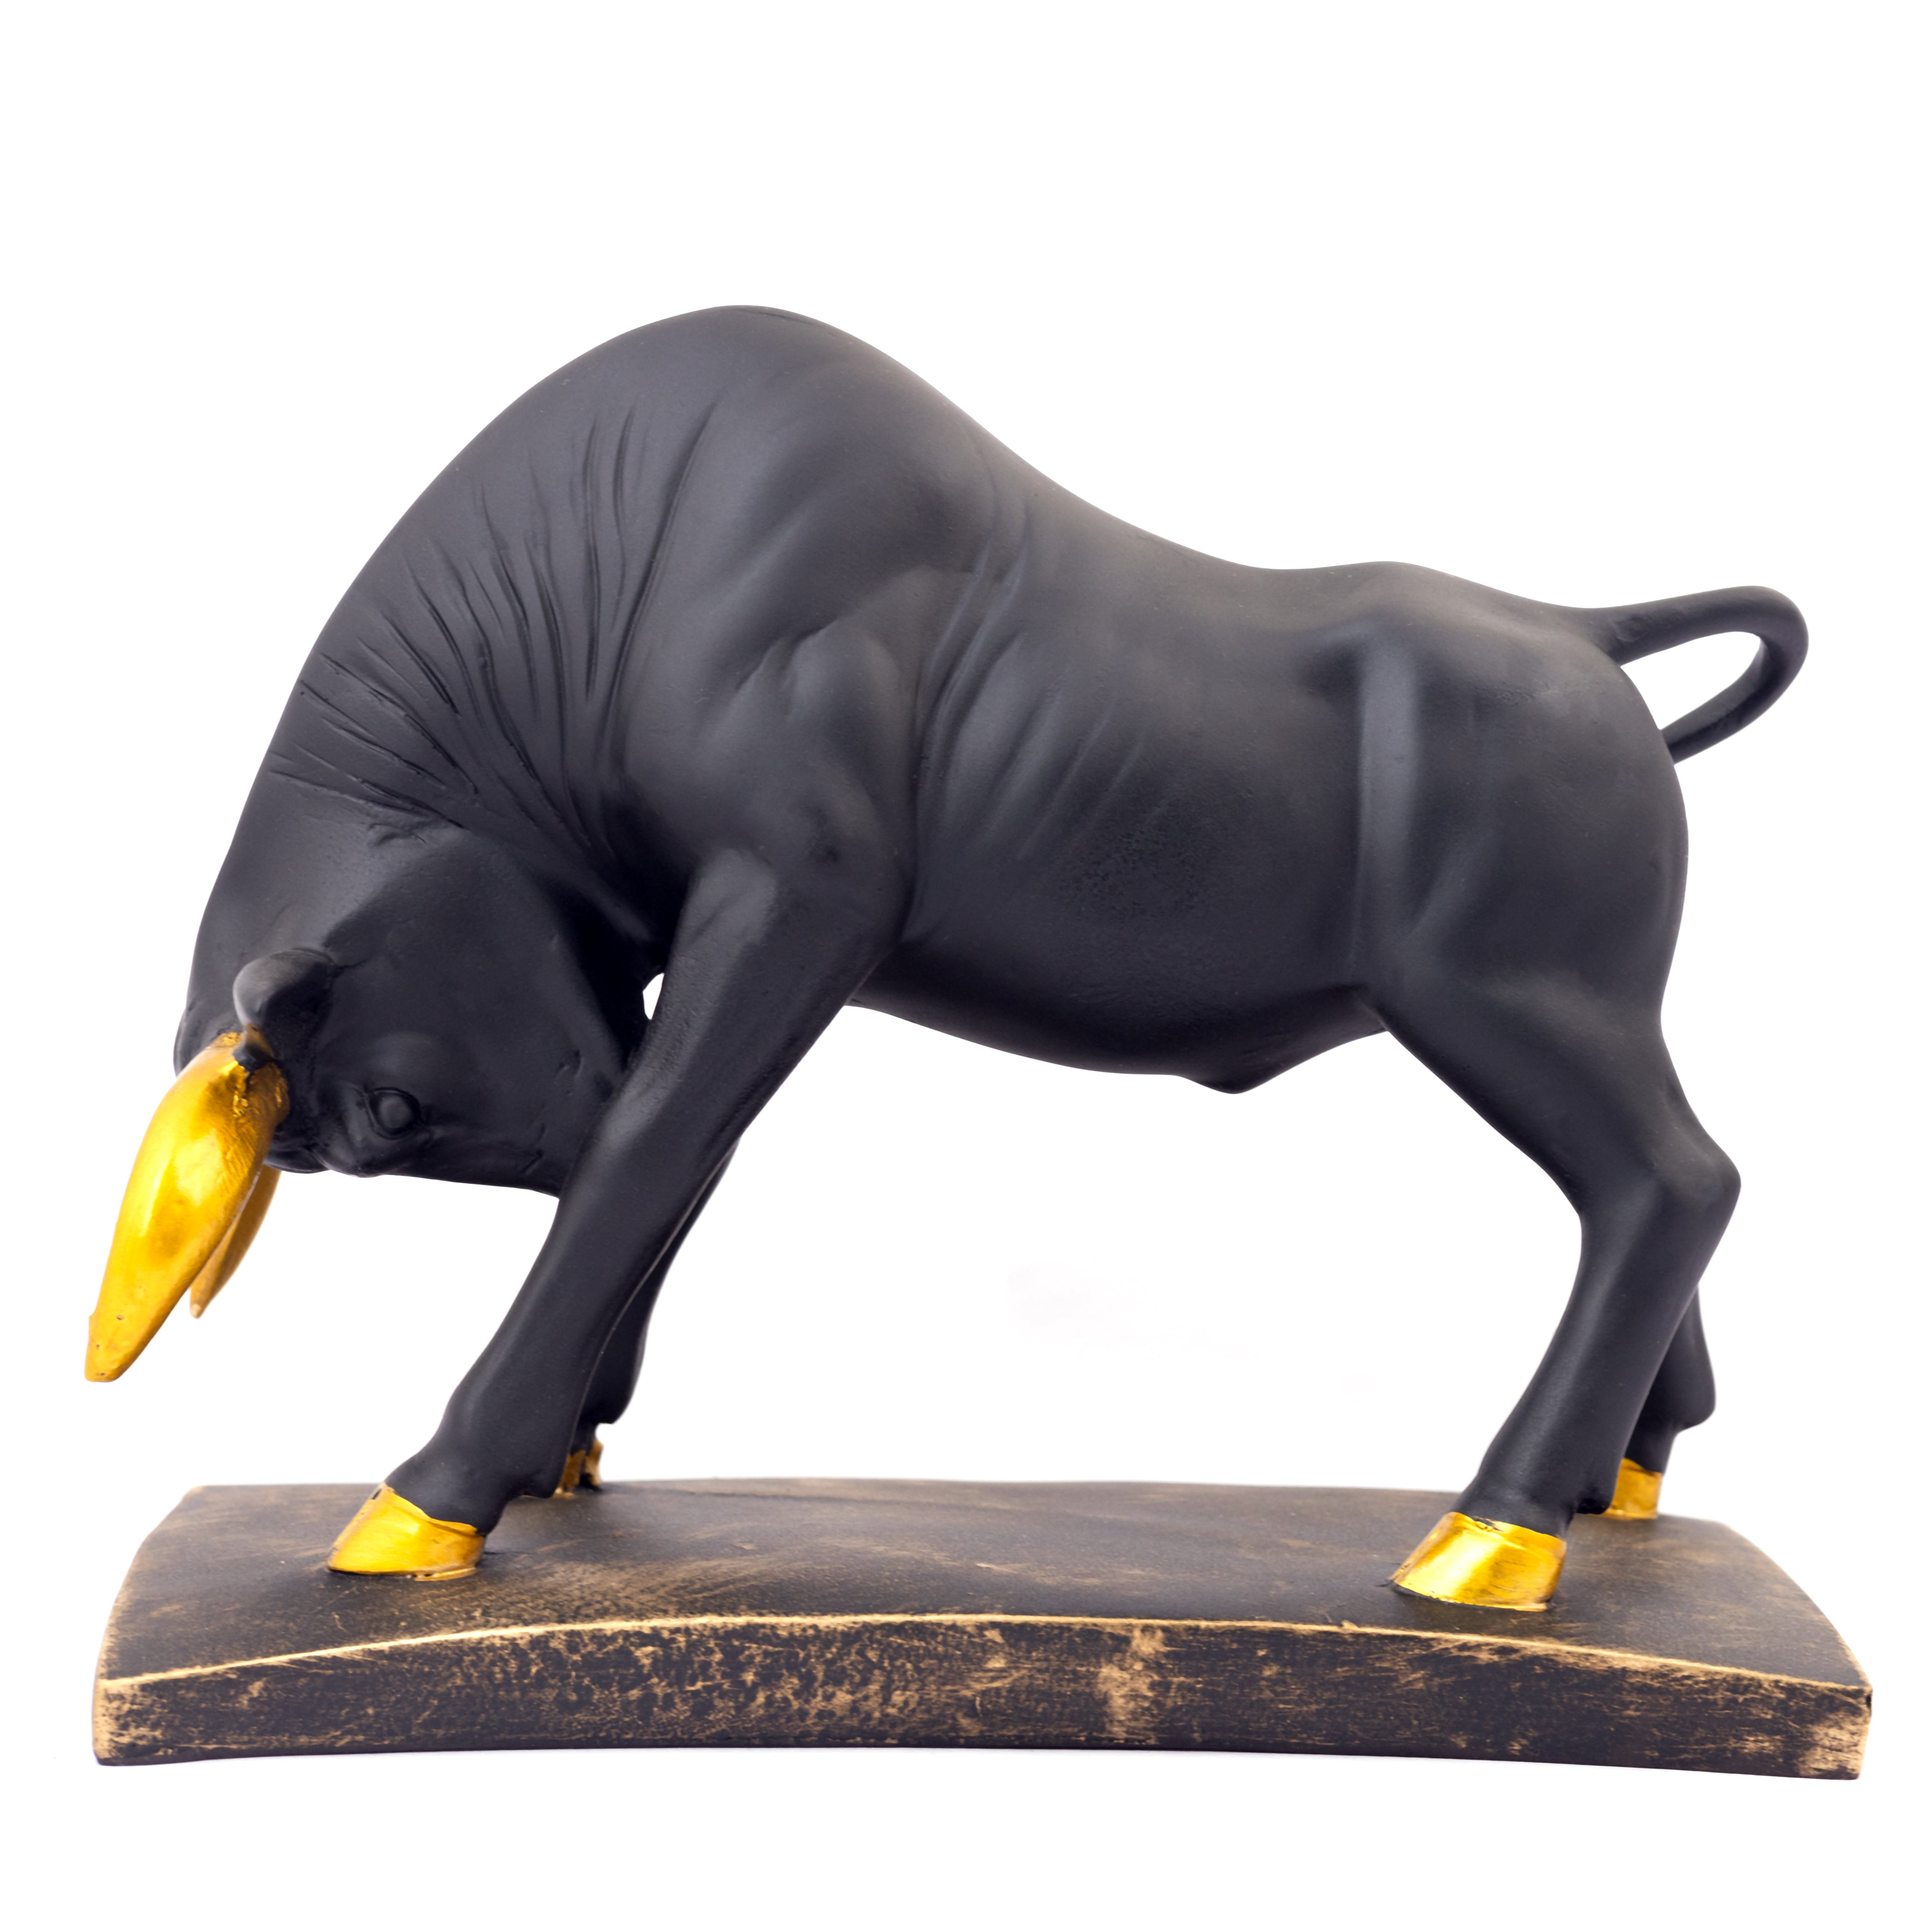 Regal Bull Sculpture